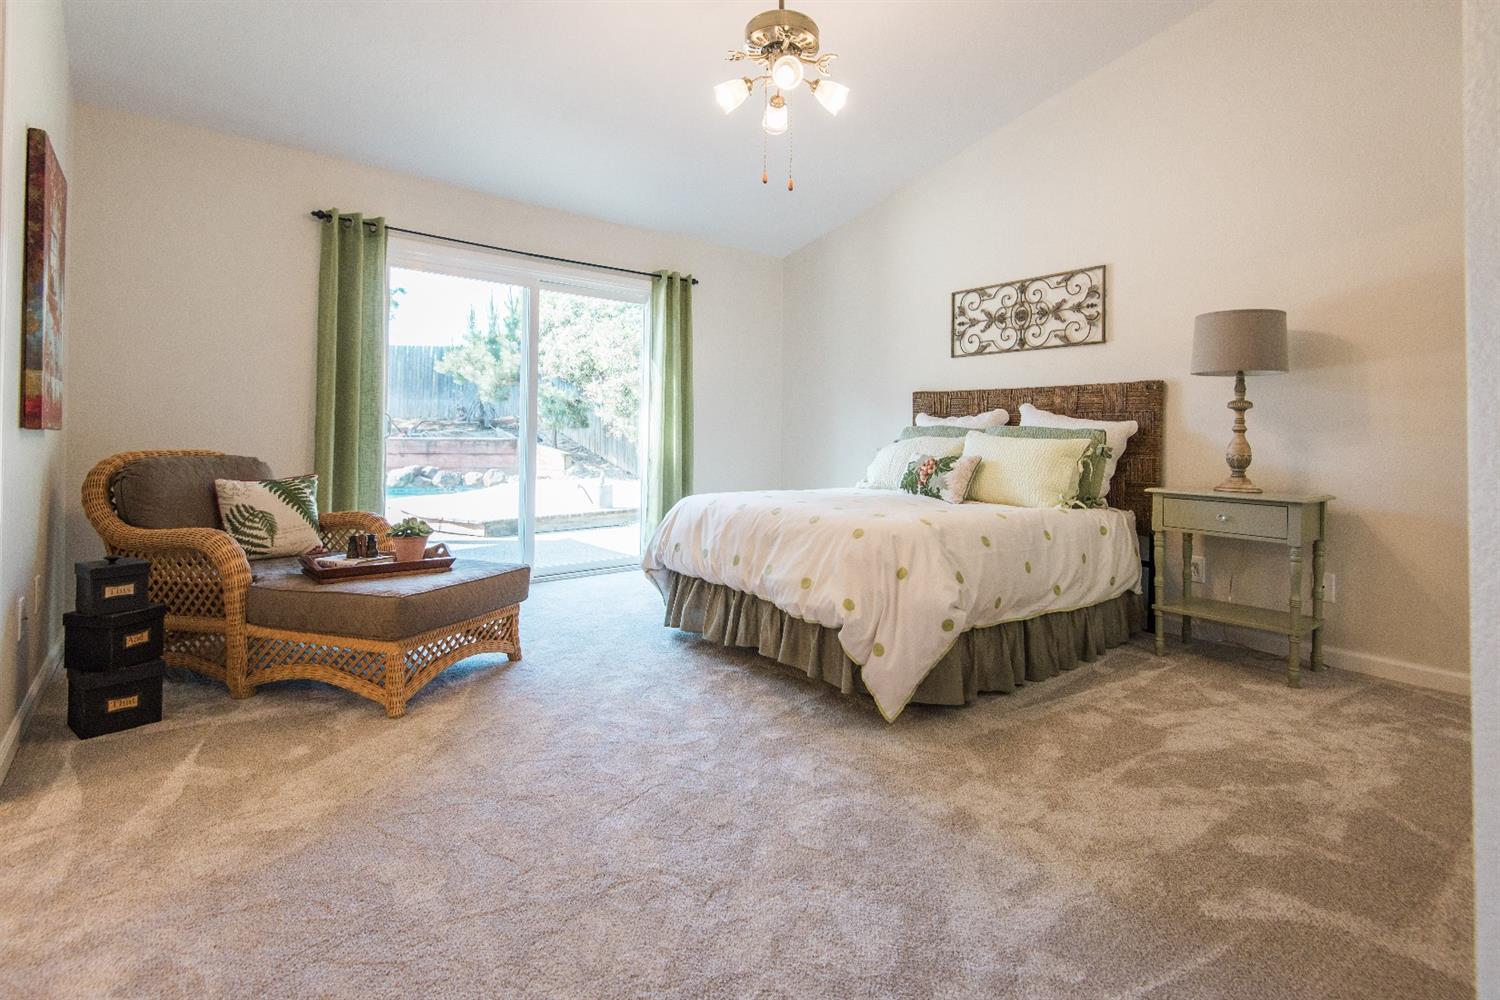 Impressions ReDesign  interior decorating design affordable Bedroom redesign paint consult, RocklinCalifornia